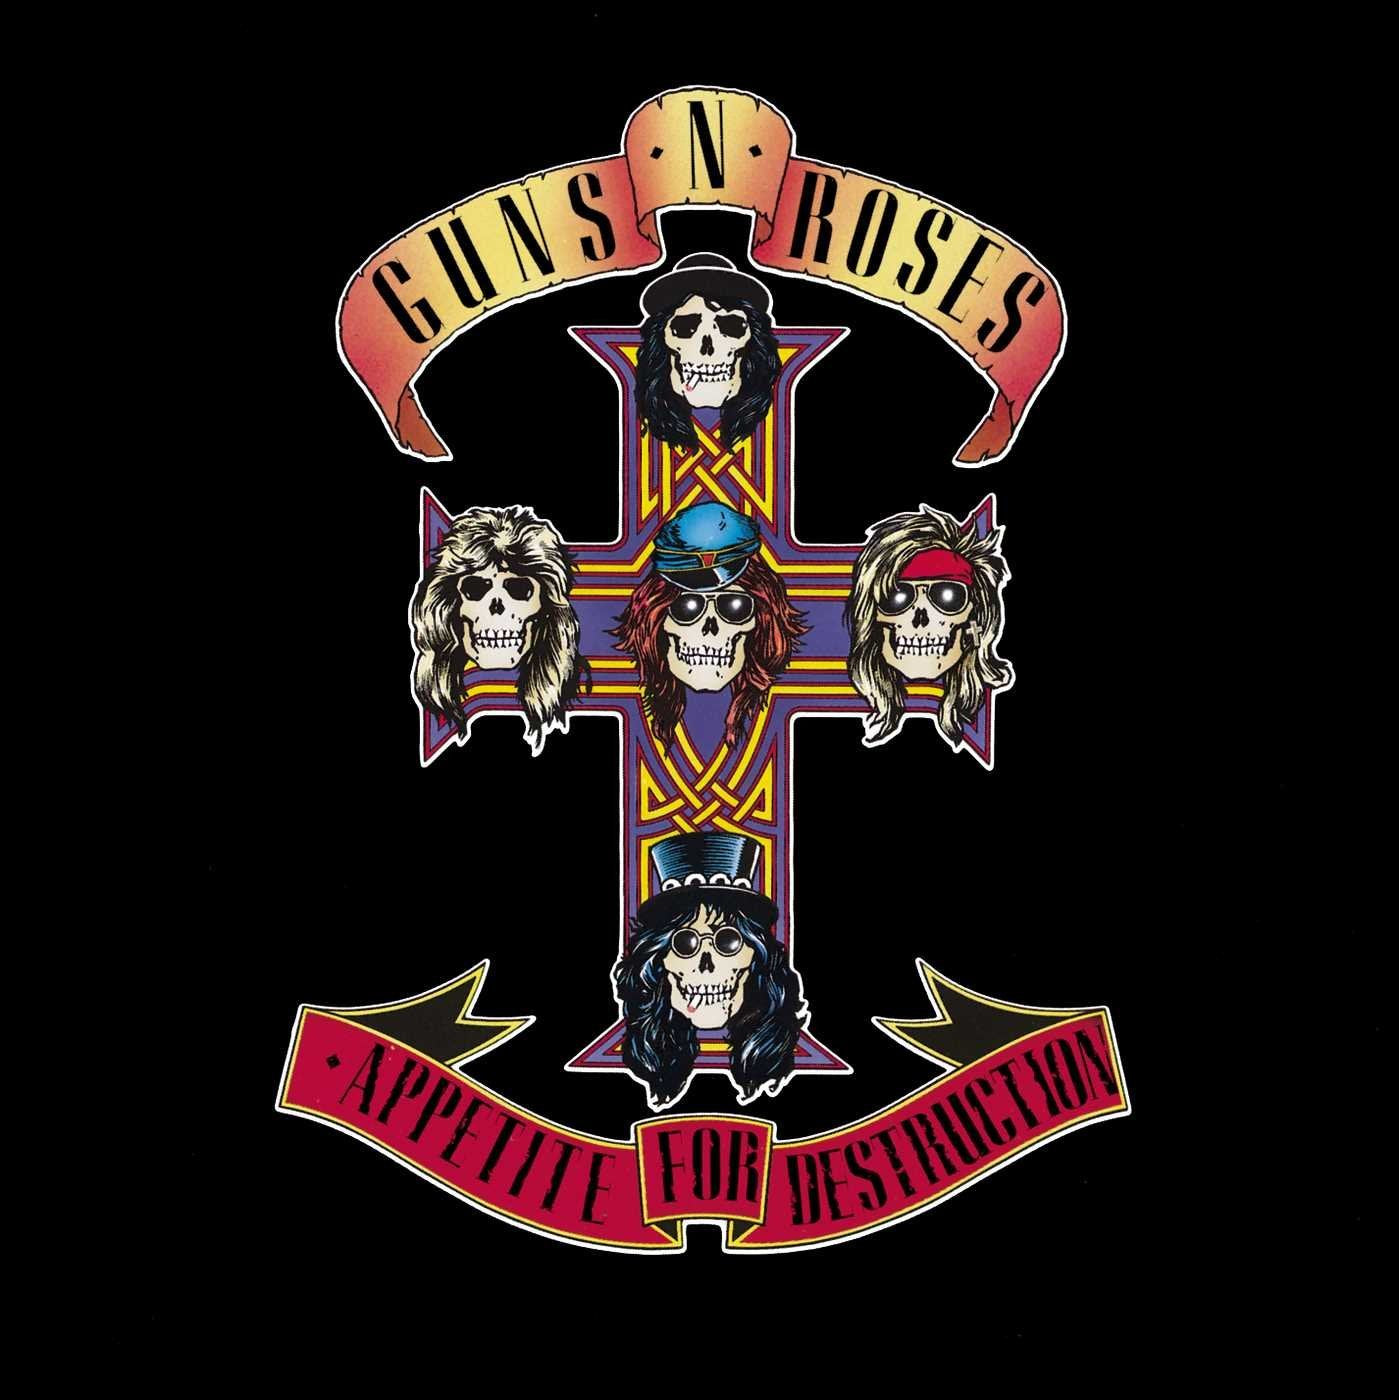 Guns N Roses - Appetite For Destruction [Explicit Content] (180 Gram Vinyl, Limited Edition, Digital Download Card) (2 Lp's) - Vinyl